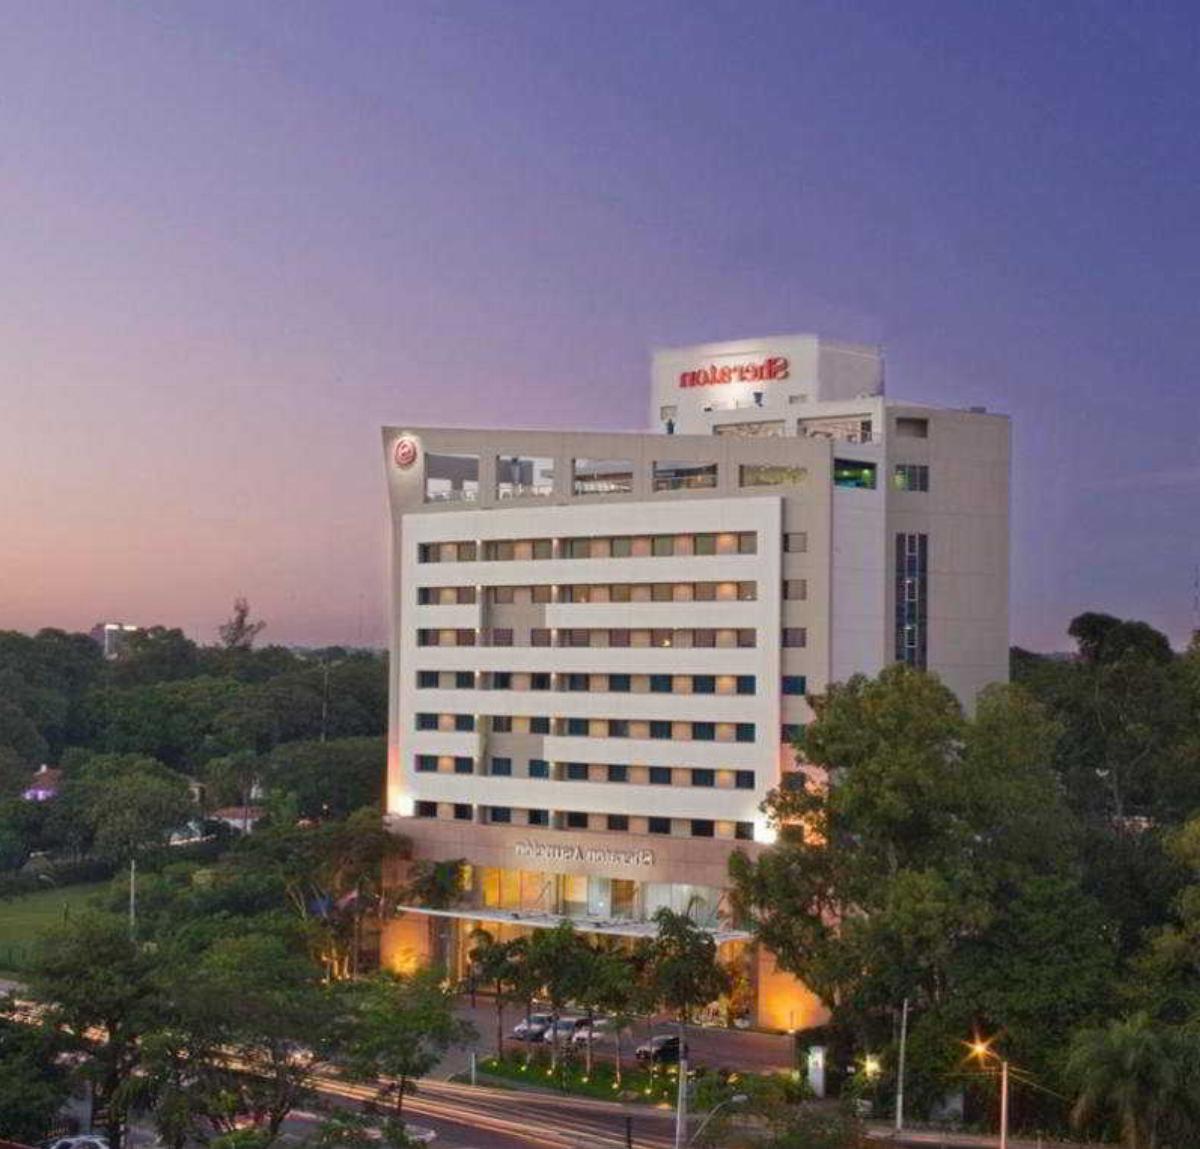 Sheraton Asuncion Hotel Hotel Asuncion Paraguay